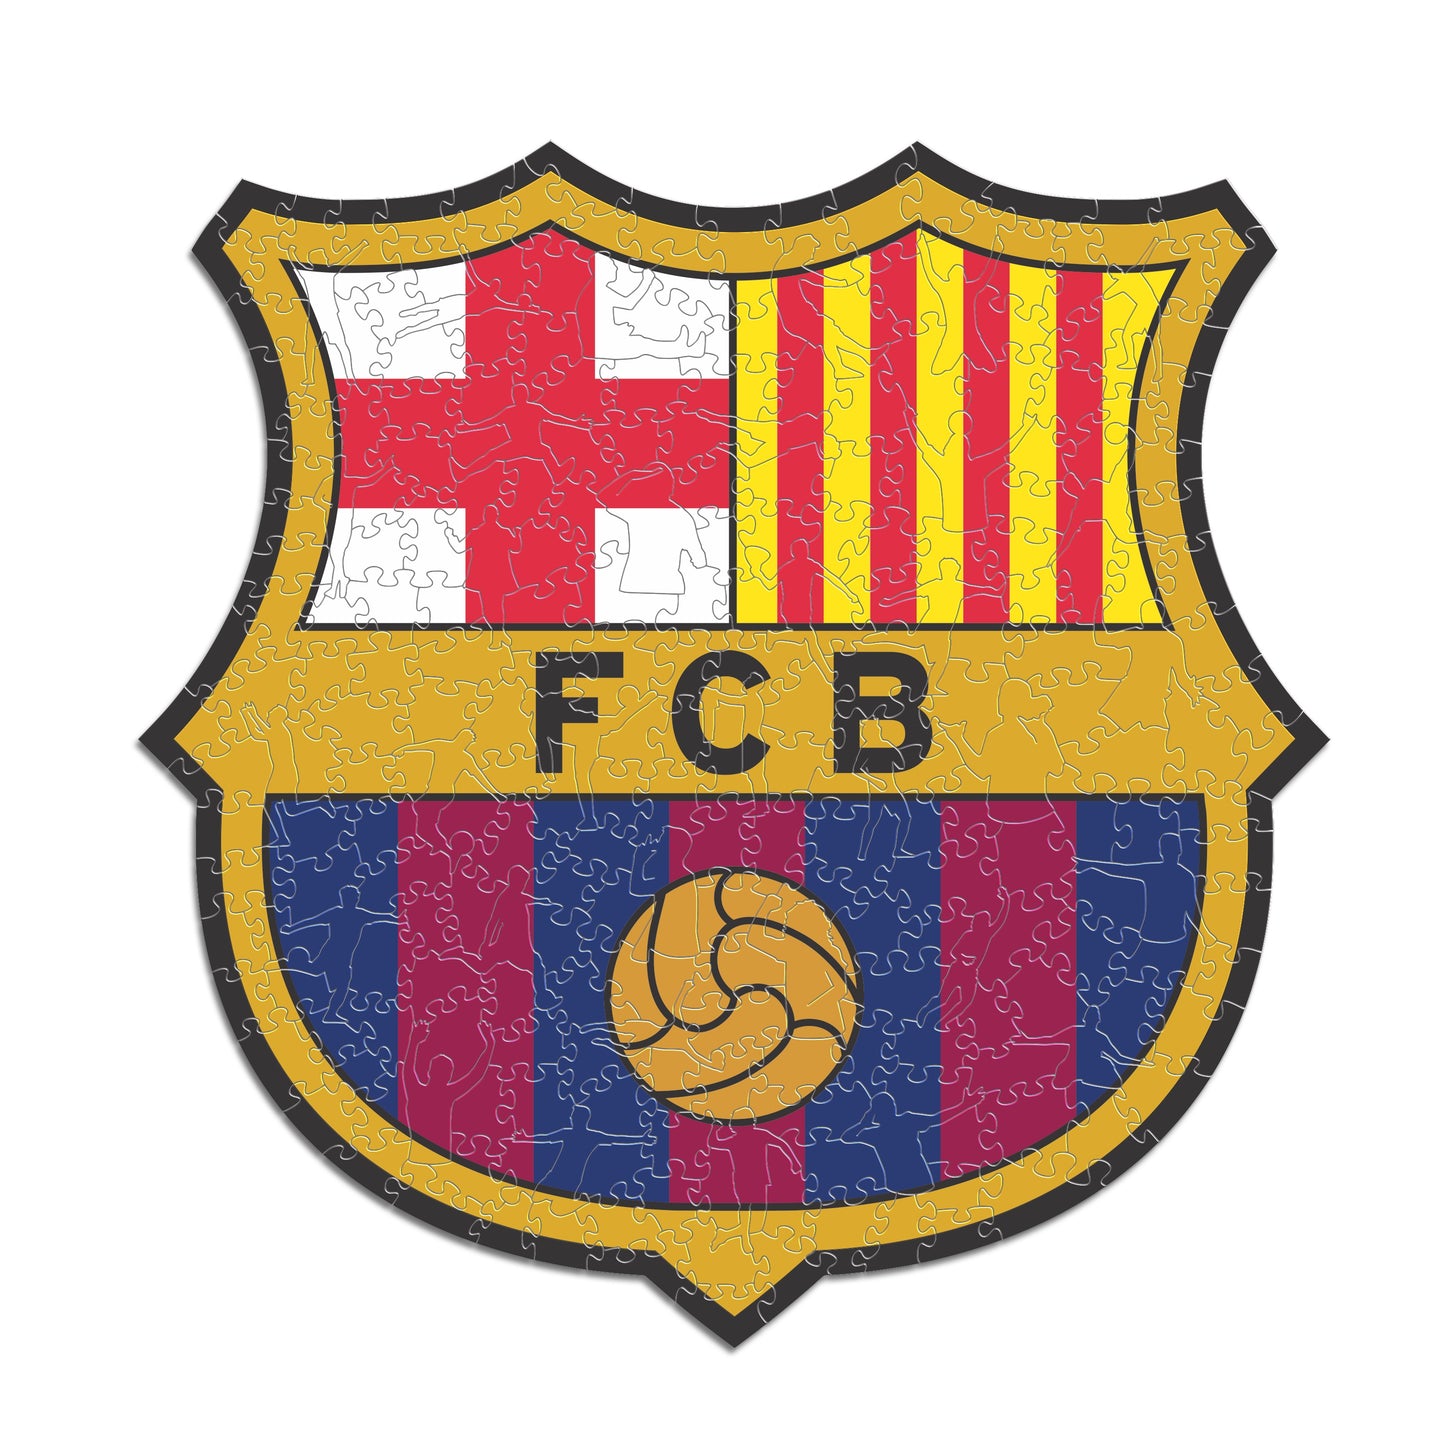 FC Barcelona® Logo - Wooden Puzzle